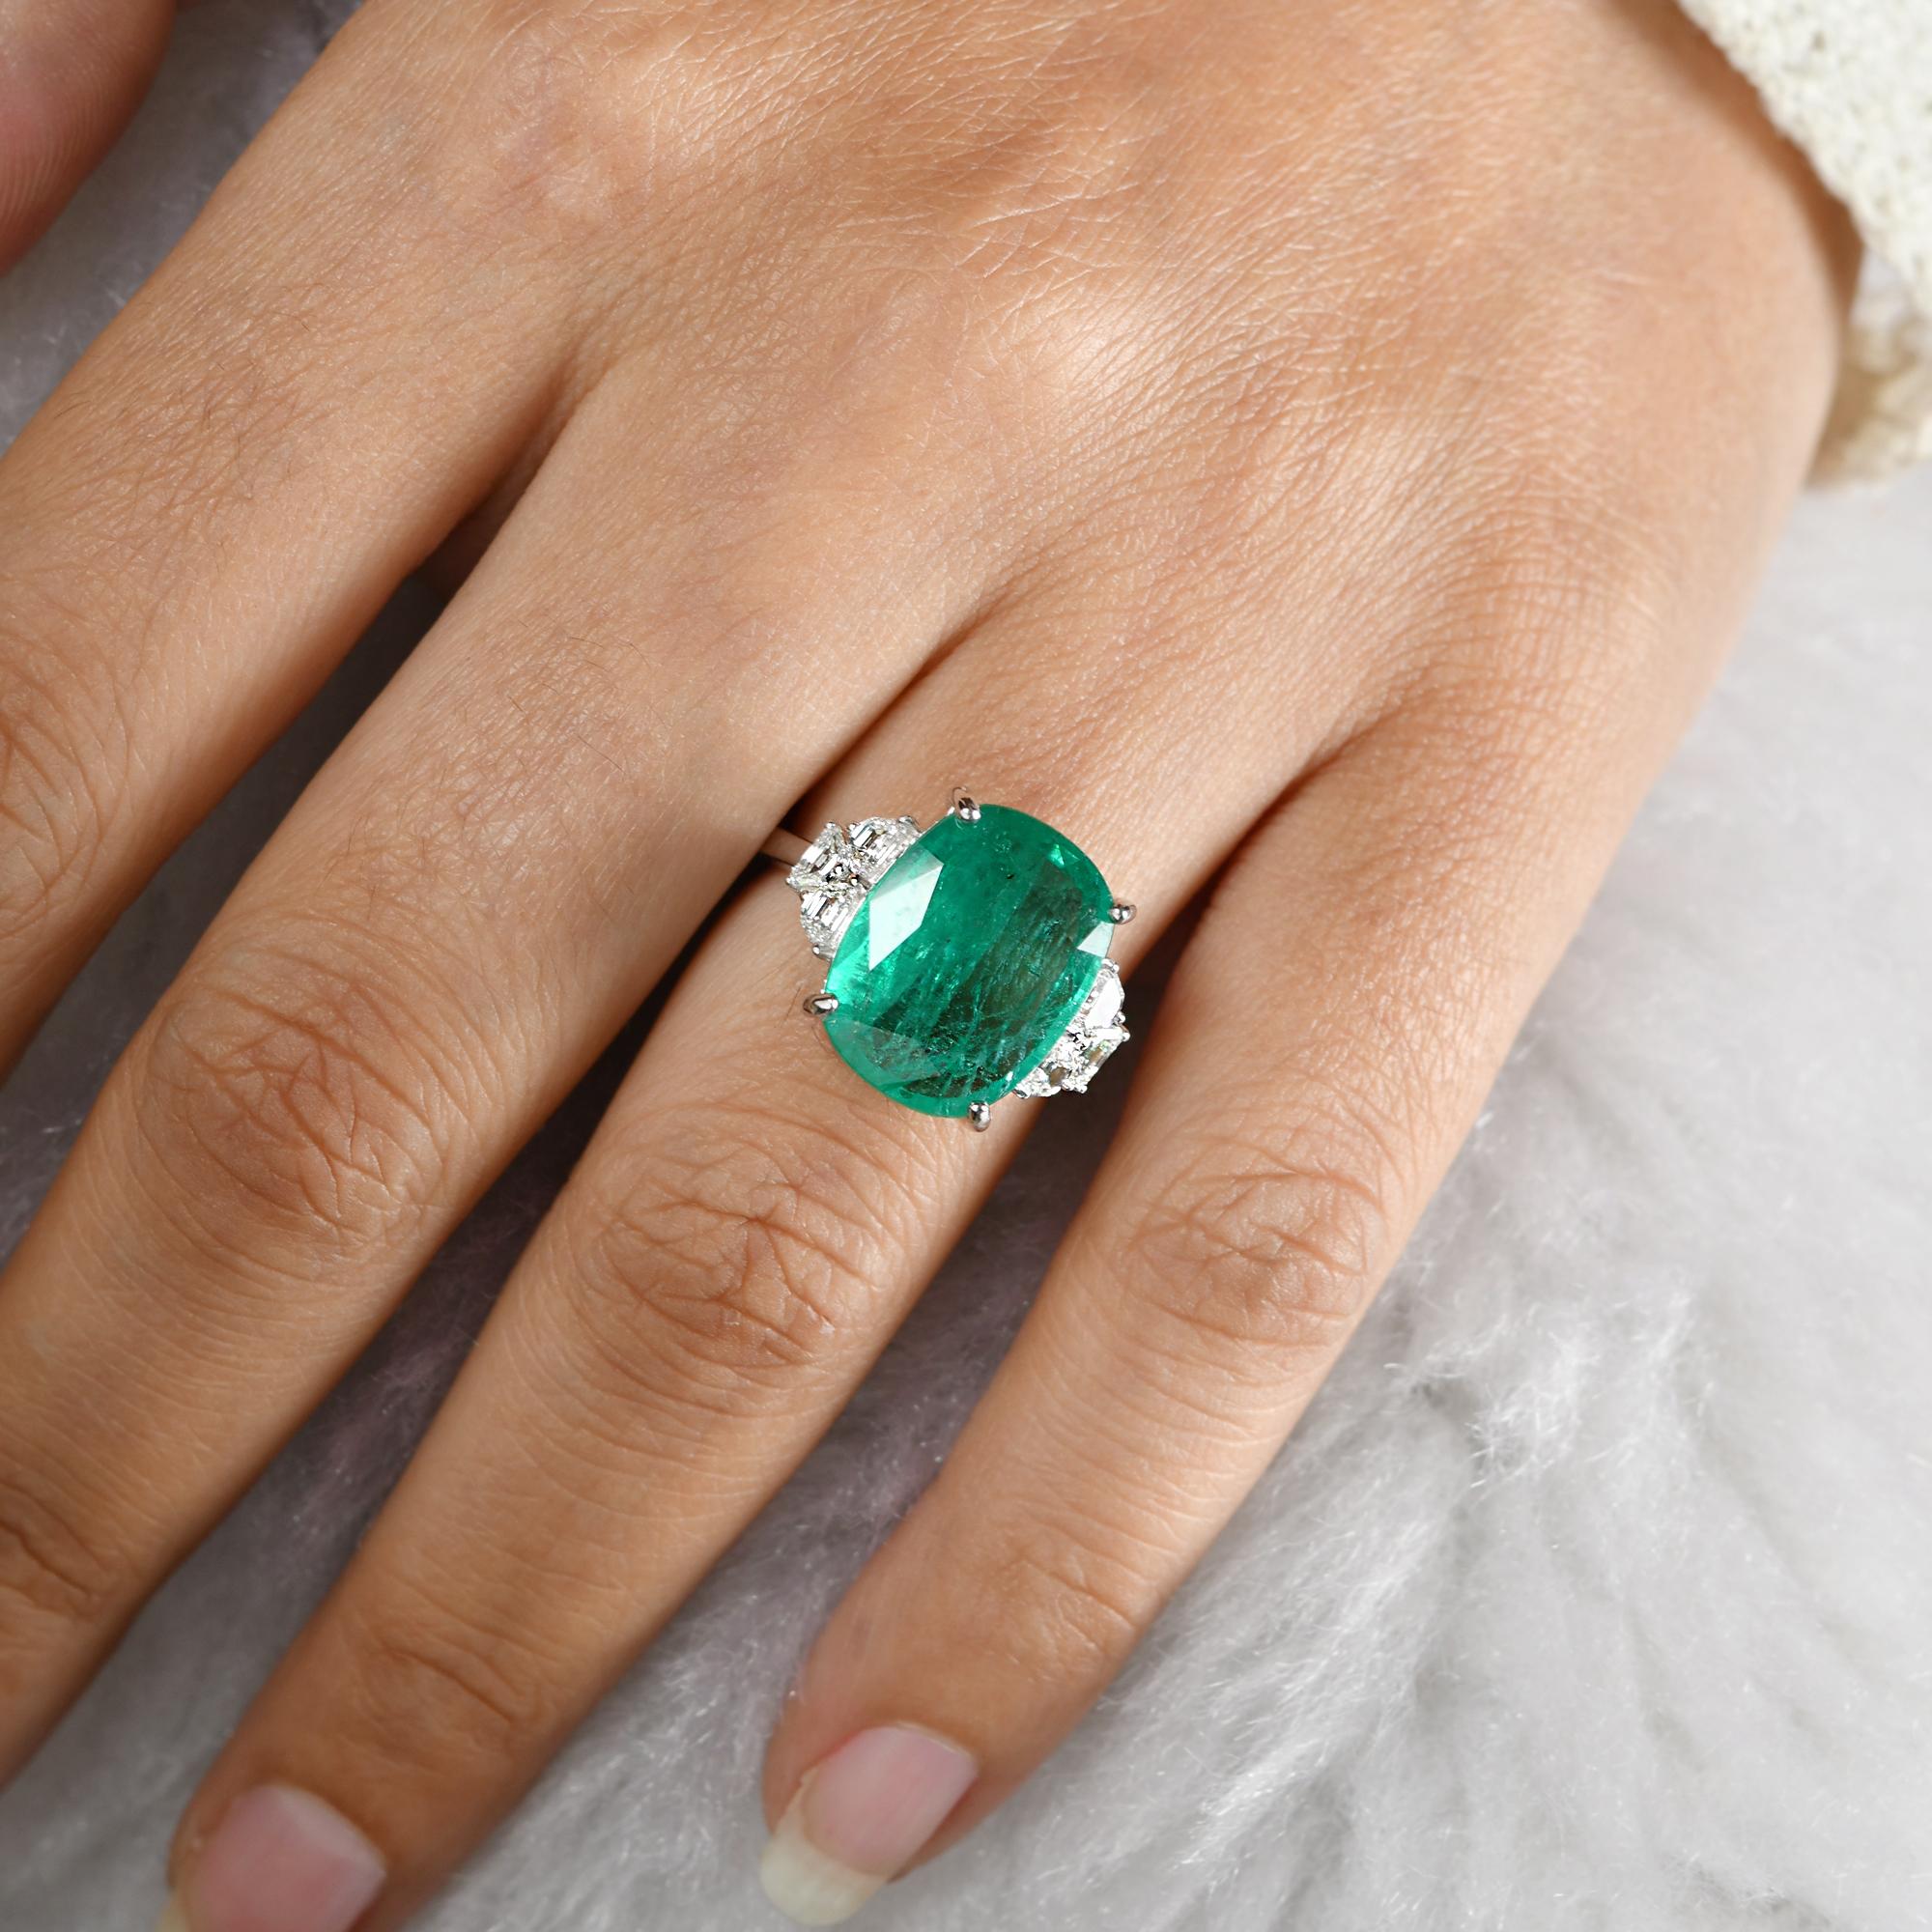 For Sale:  Oval Shape Natural Emerald Gemstone Ring Diamond 18 Karat White Gold Jewelry 5